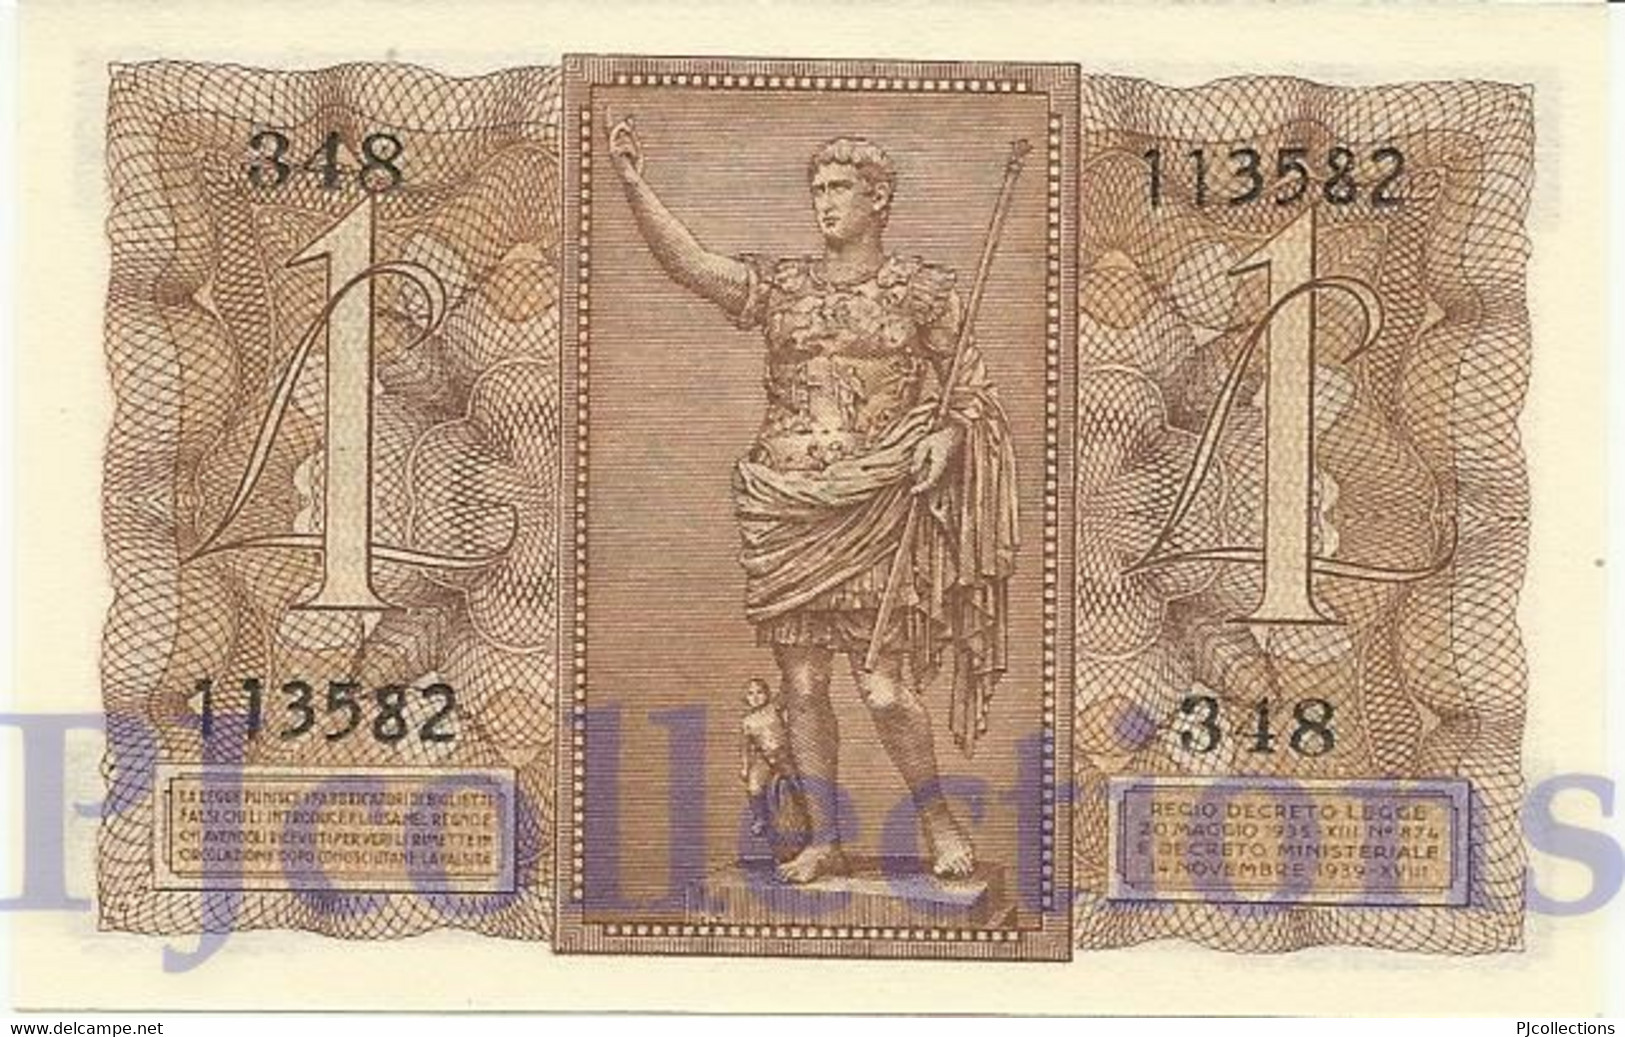 ITALY 1 LIRA 1939 PICK 26 UNC - Italia – 1 Lira